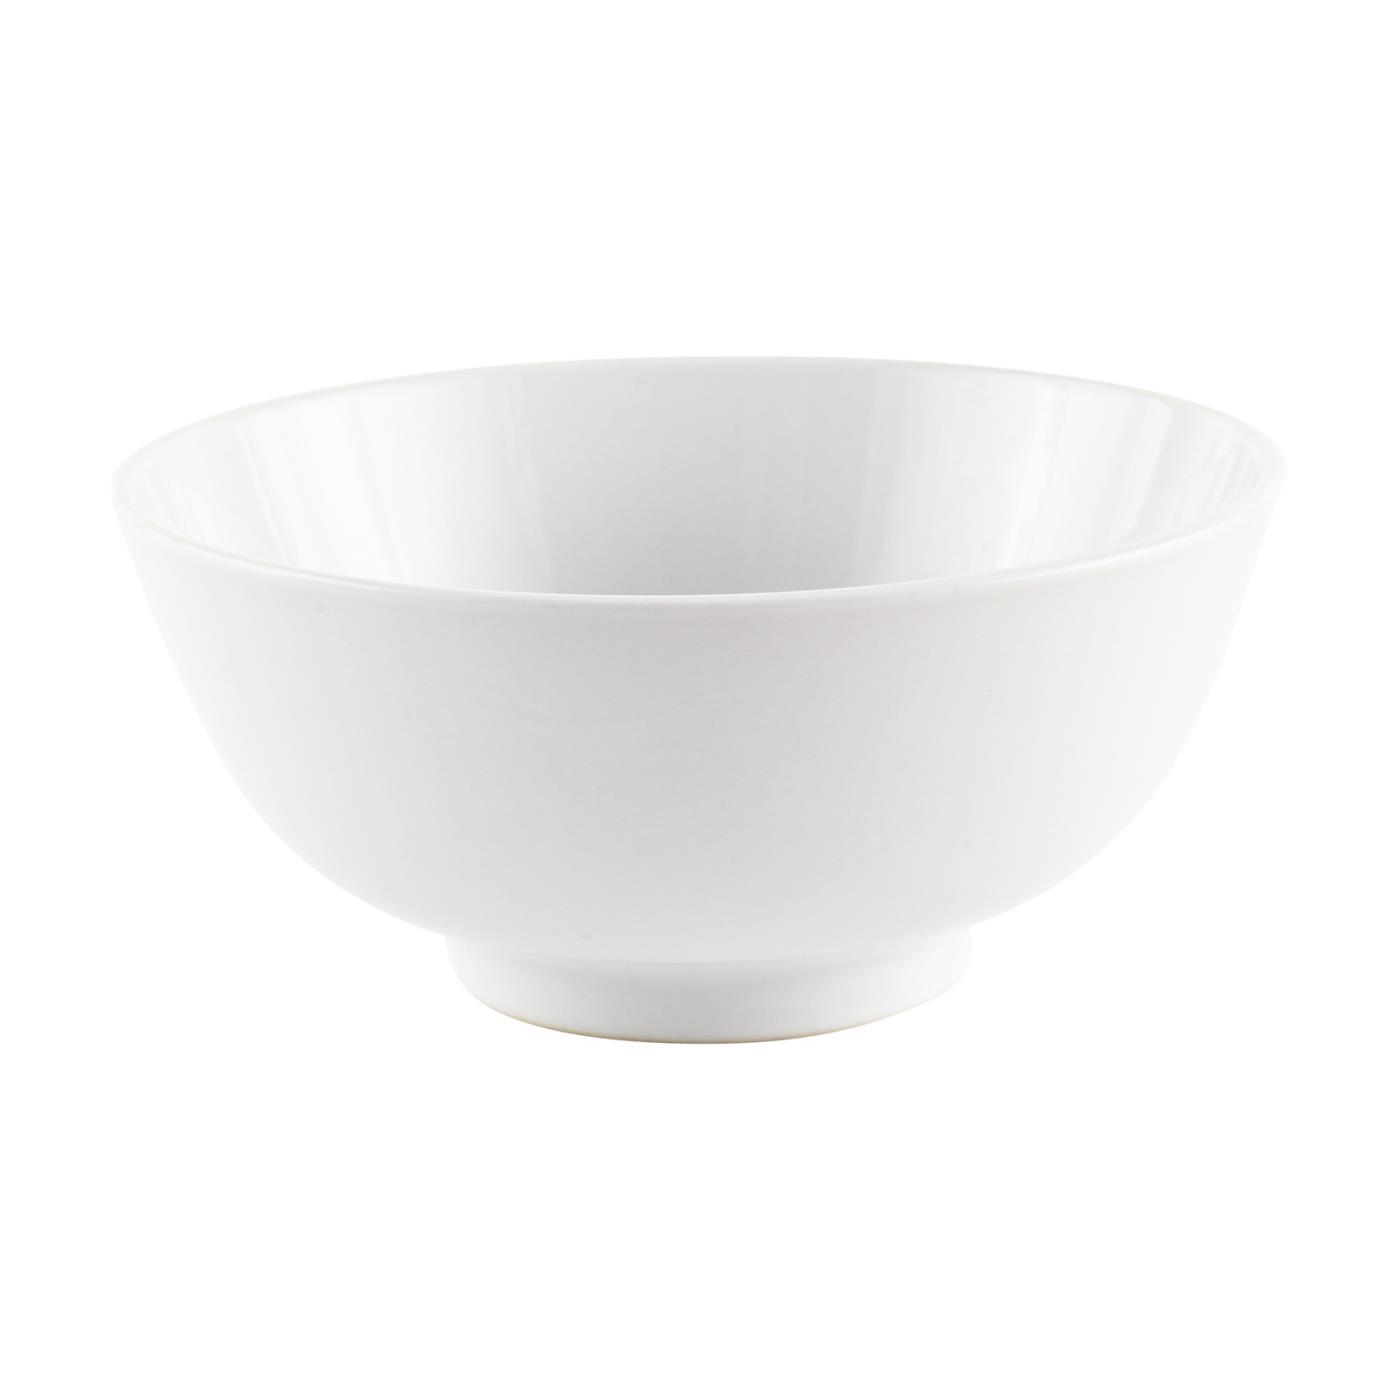 White Ceramic Round Bowl - 9"